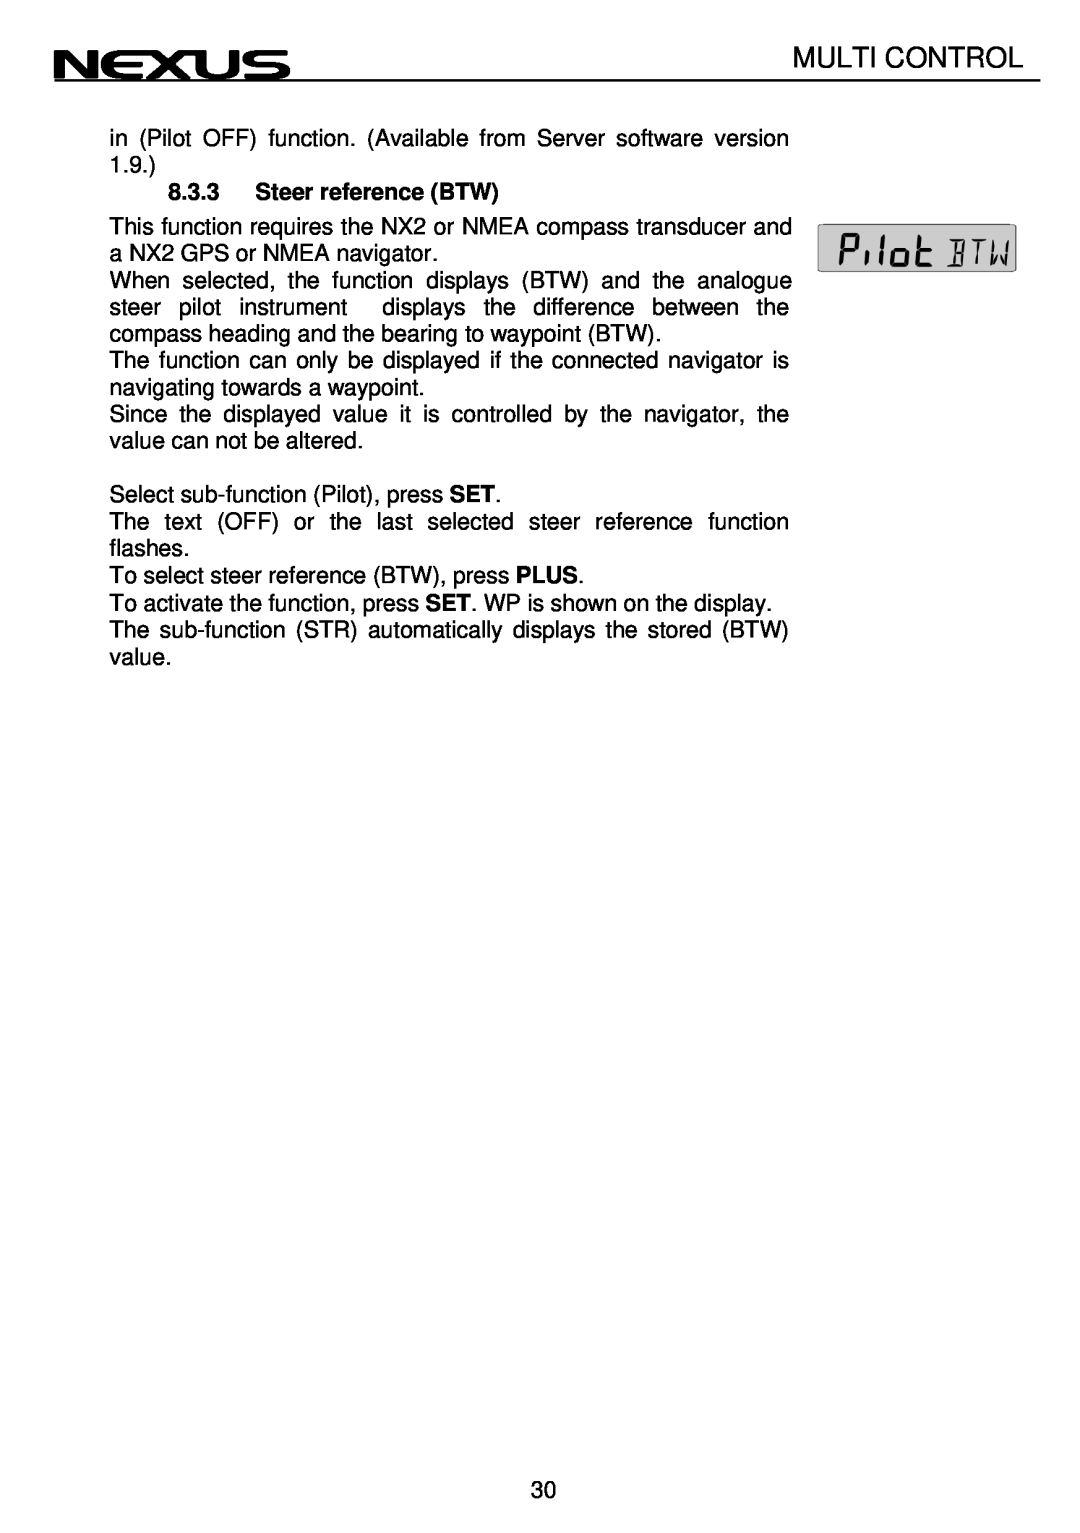 Nexus 21 Multi Control operation manual 8.3.3Steer reference BTW 